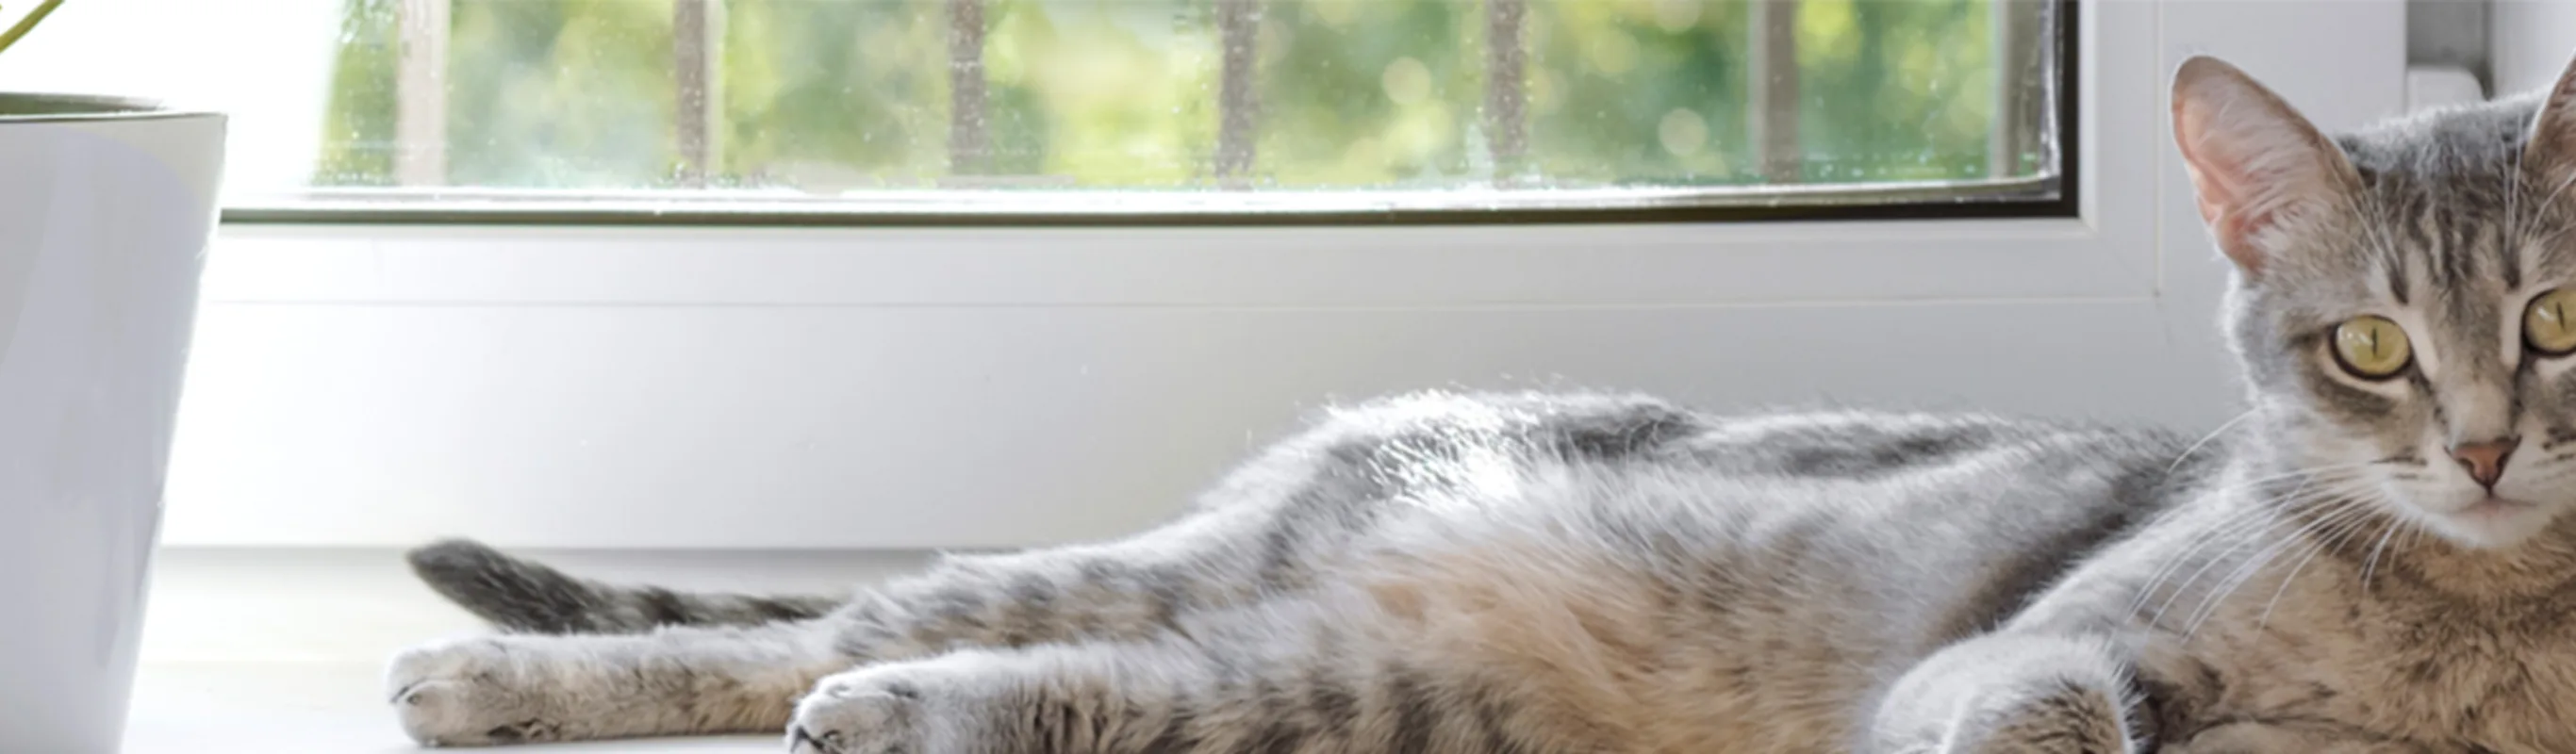 A cat laying near a window